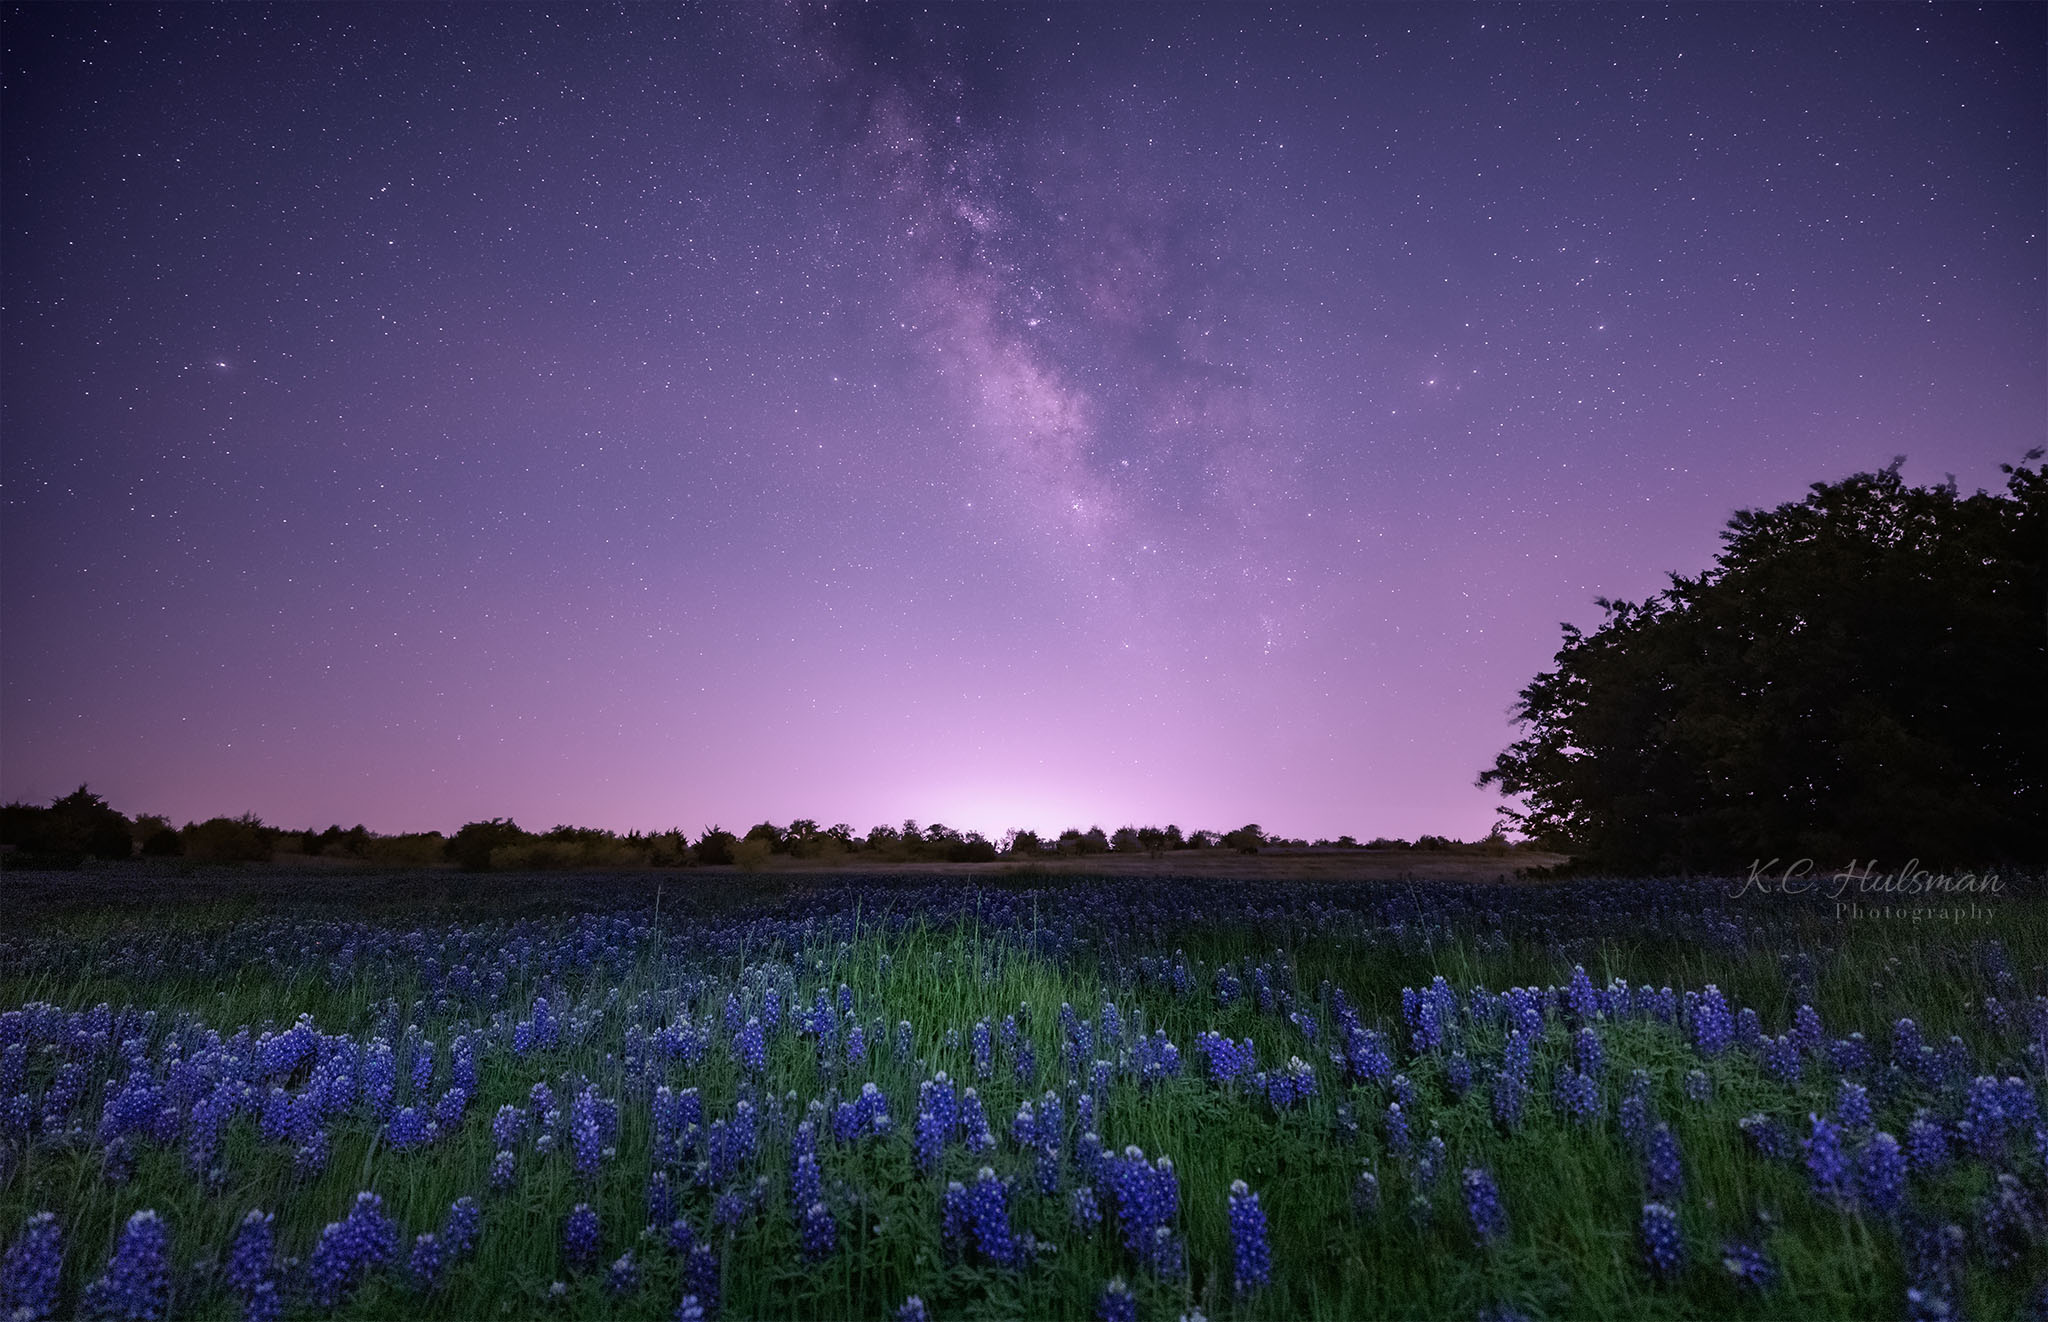 Milky Way Over Bluebonnets by KC Hulsman